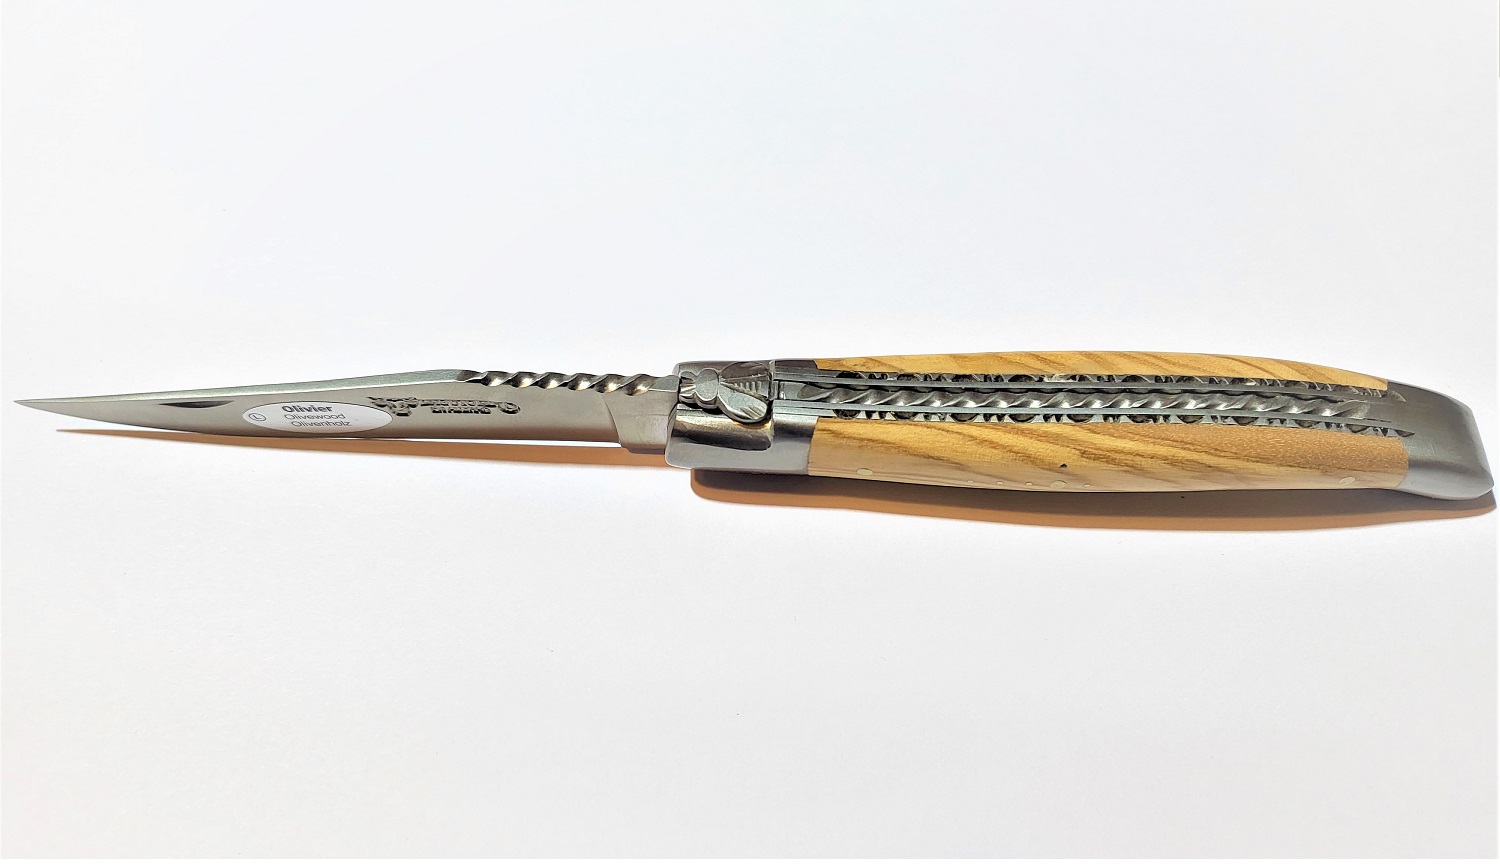 LAGUIOLE en Aubrac Original Taschenmesser Griffschalen aus Olivenholz